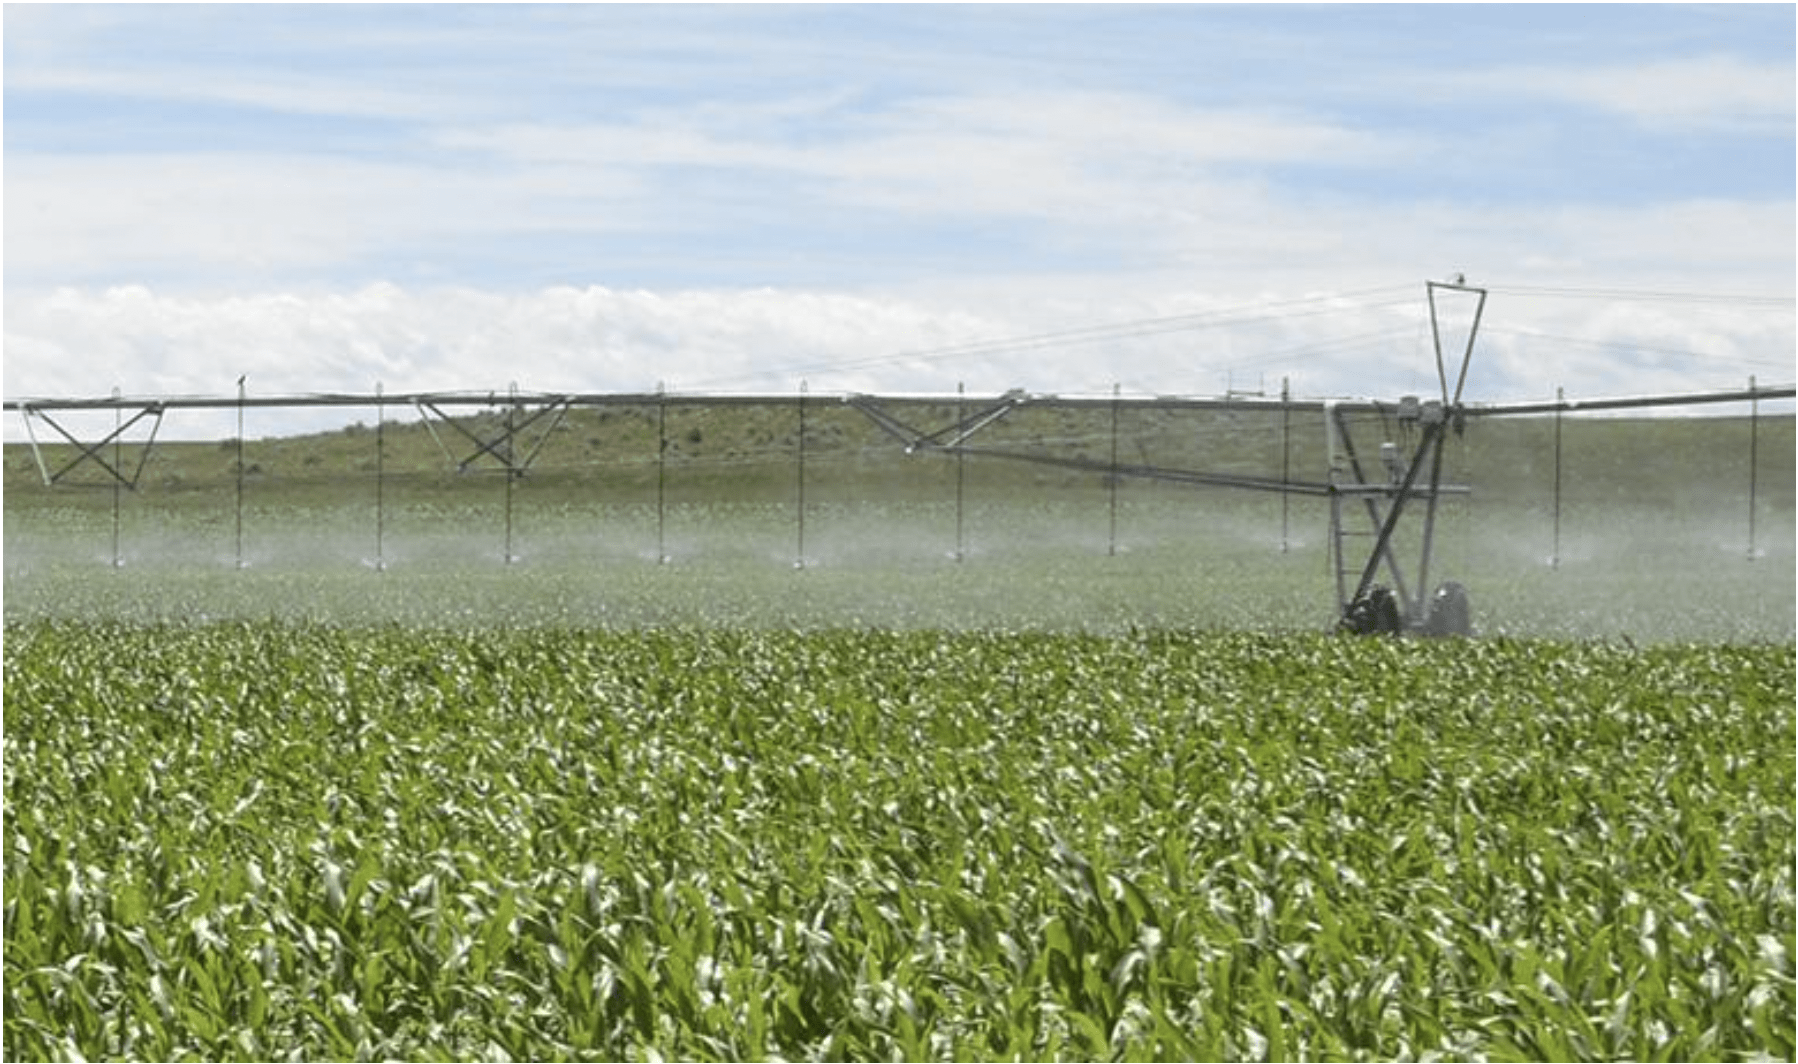 Crop field being watered